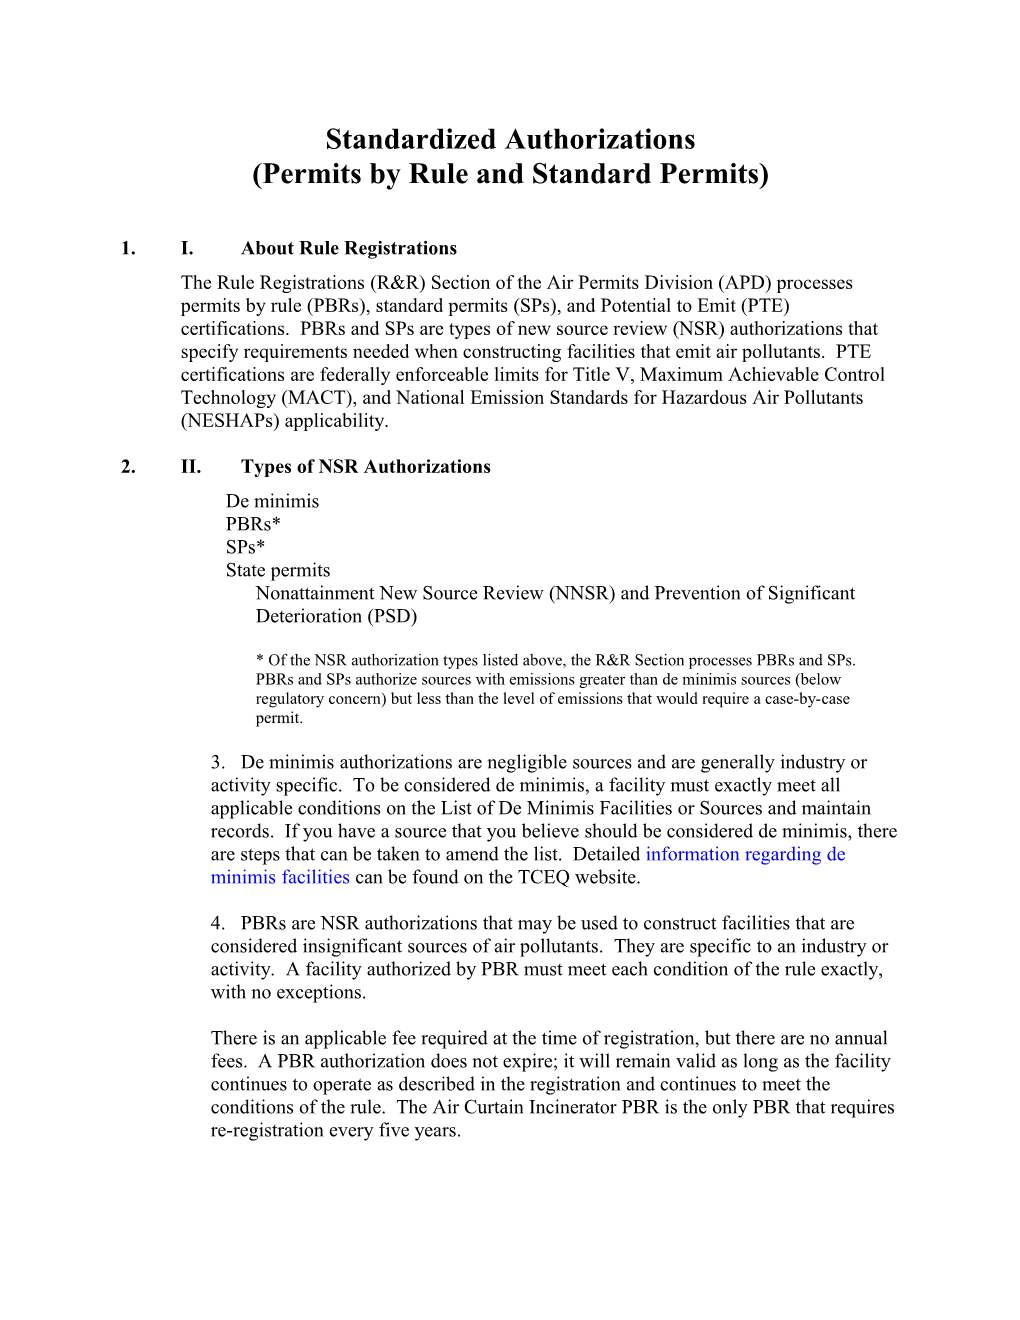 Standardized Authorizations (Permits by Rule, Standard Permits, Etc.)